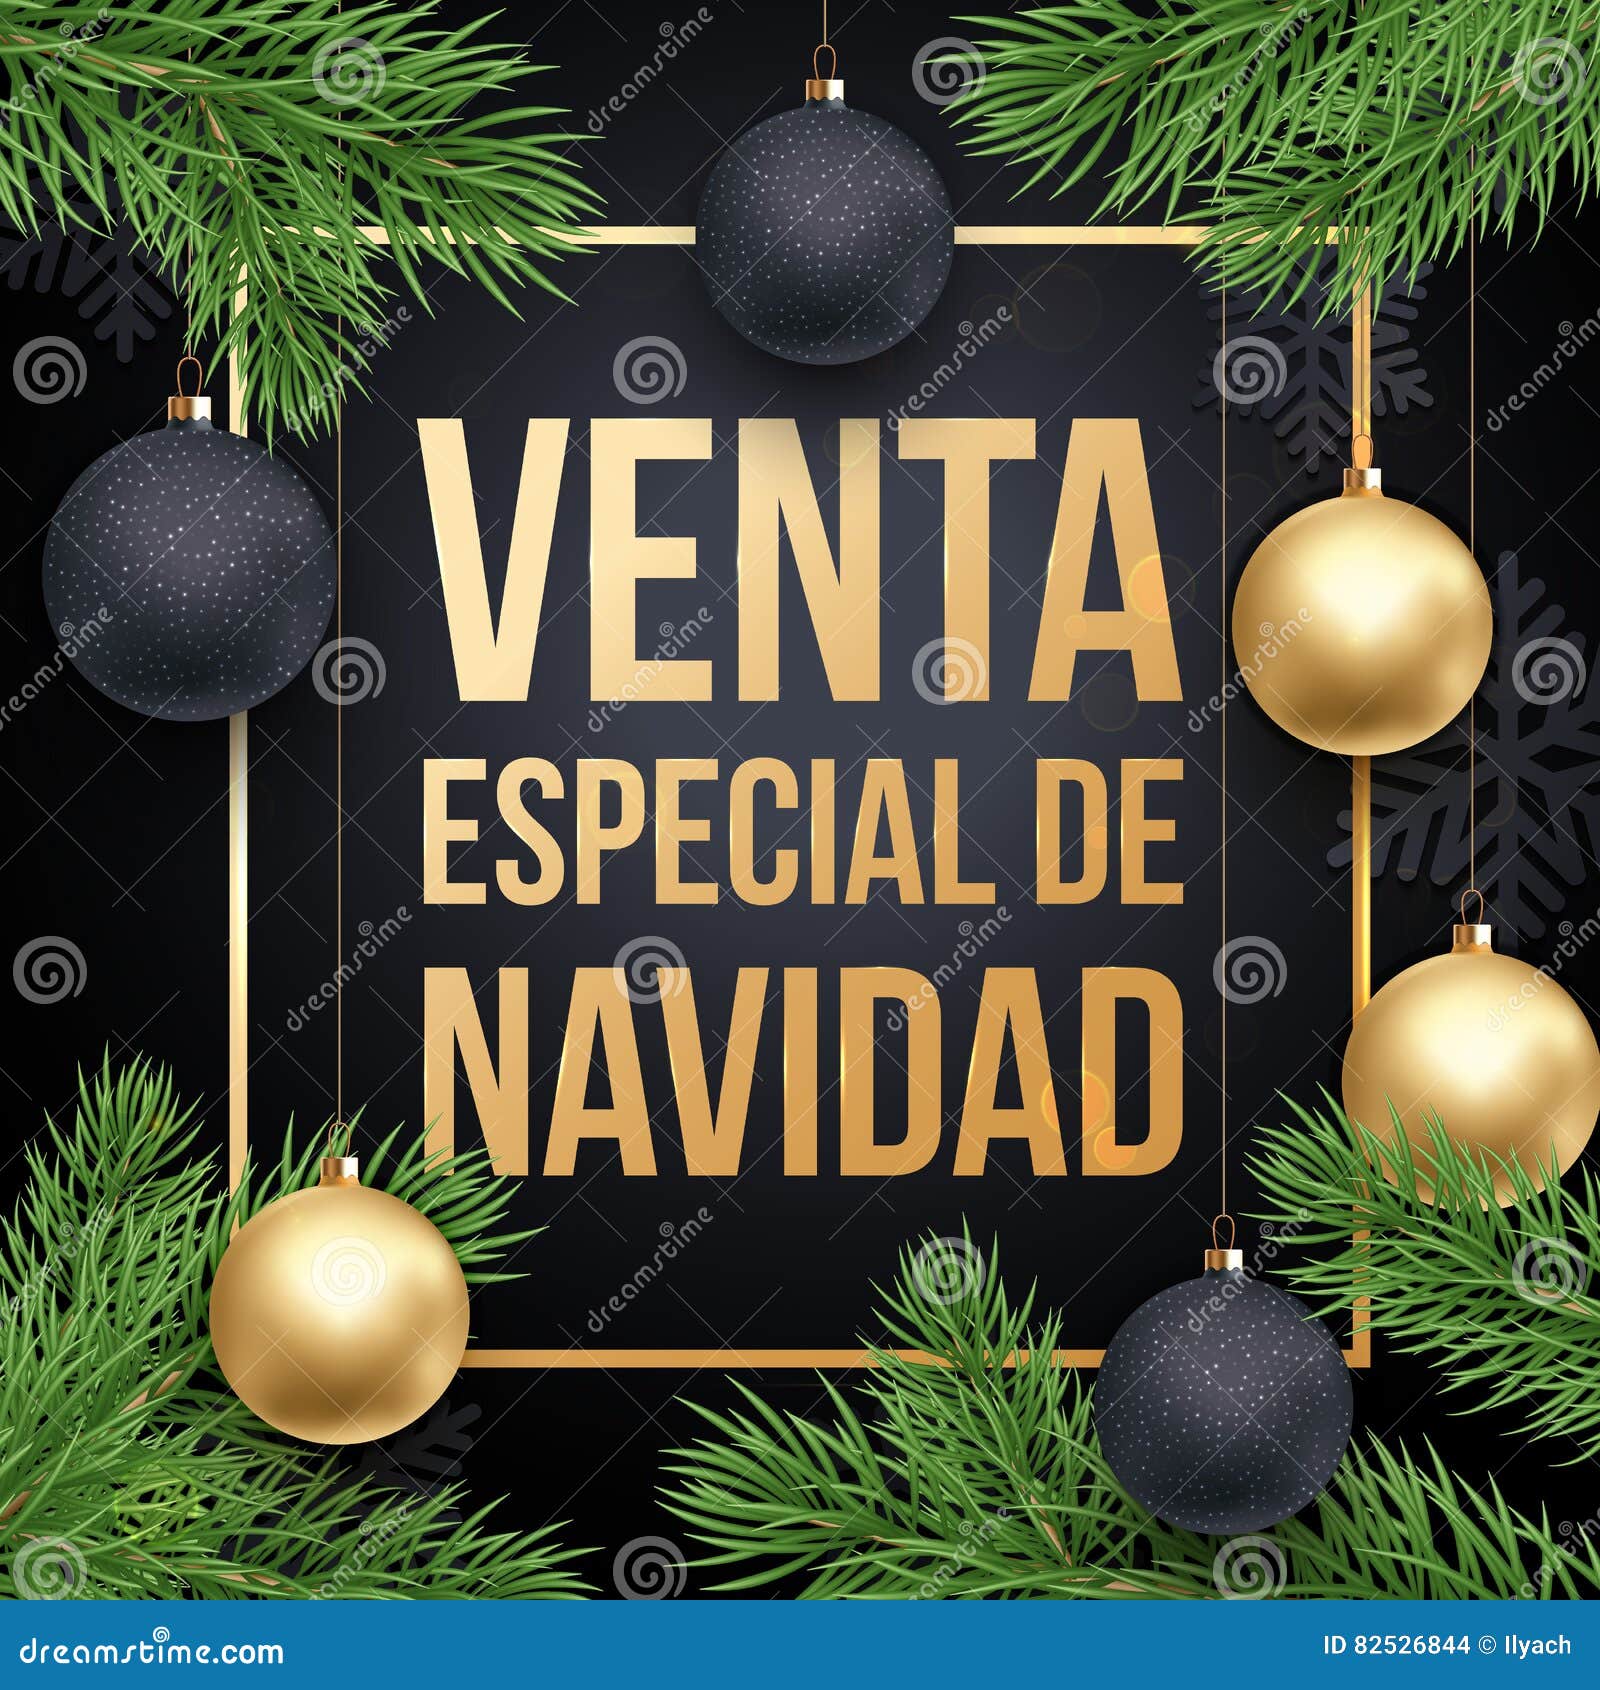 christmas sale spanish venta de navidad discount promo poster